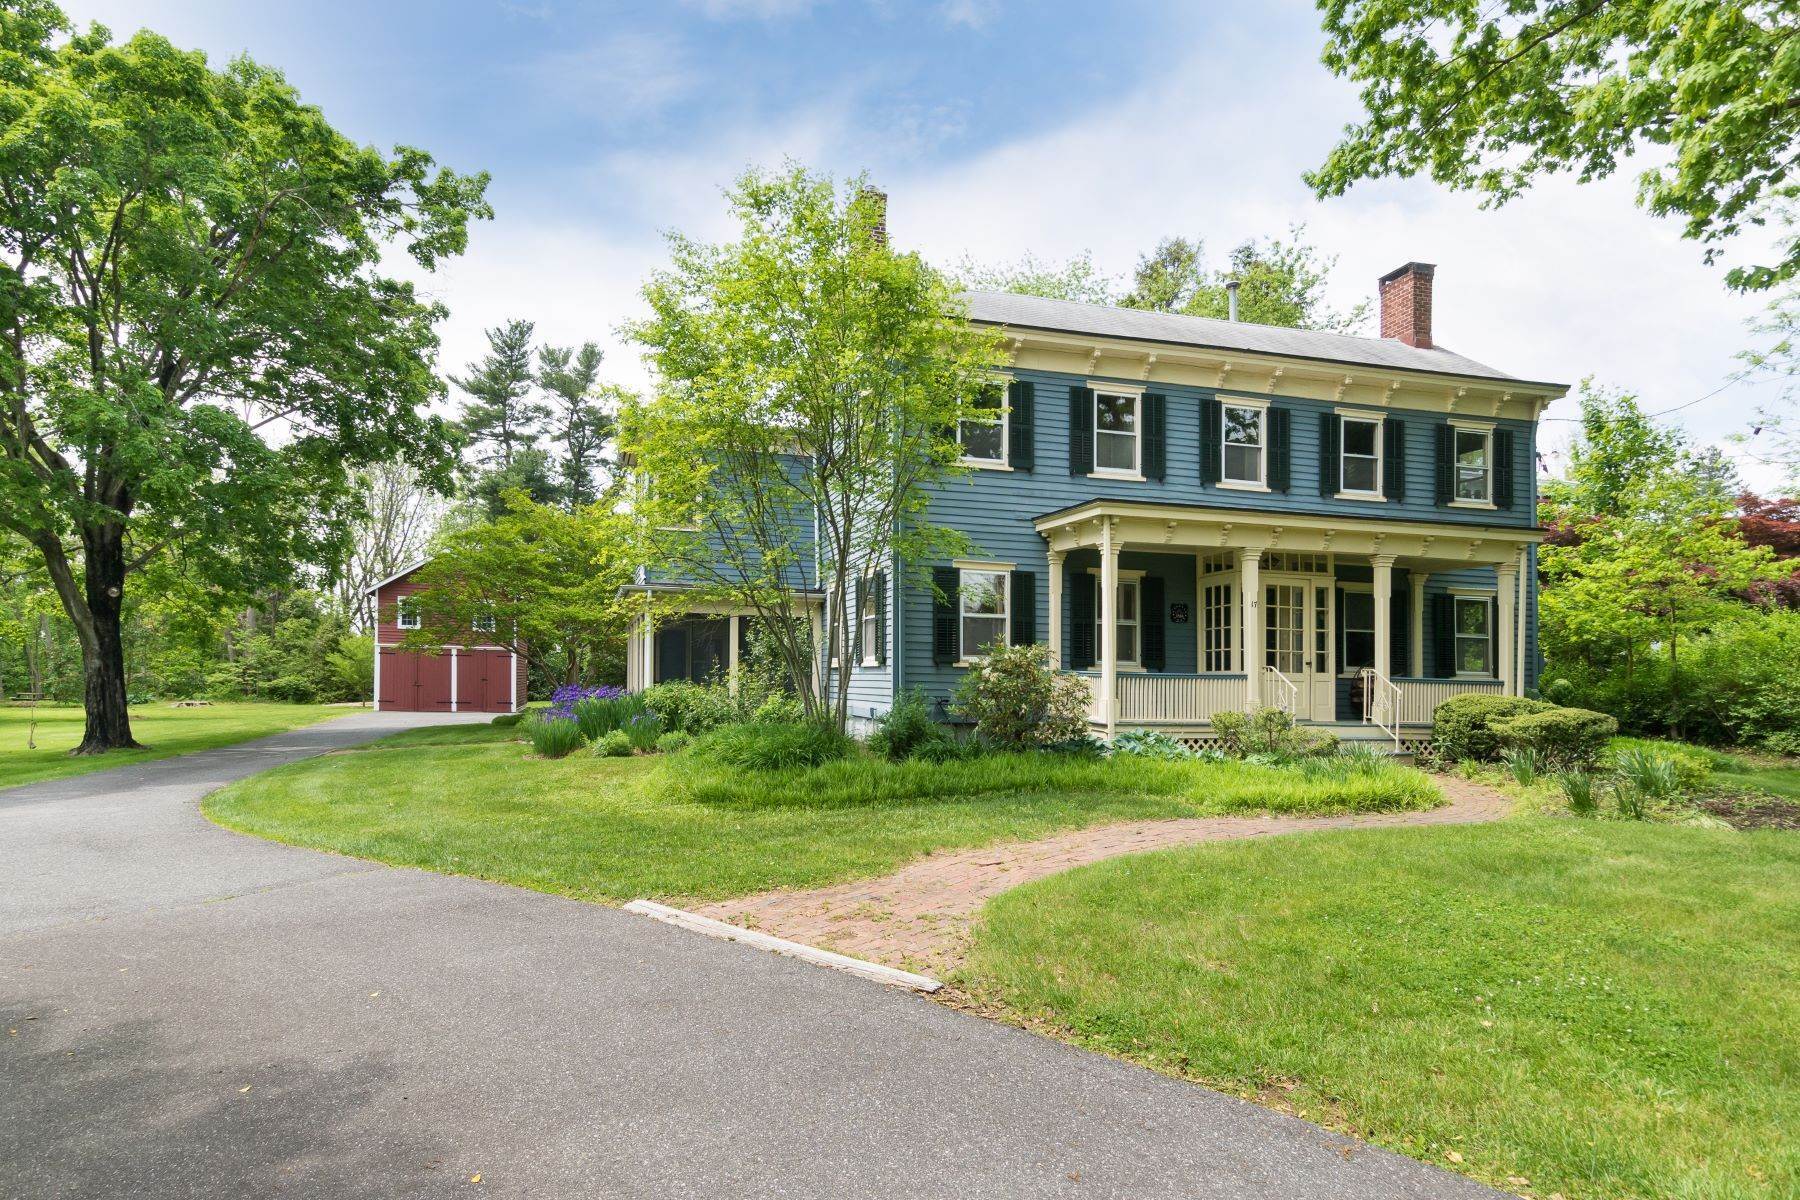 Property для того Продажа на Beautifully preserved farmhouse on bucolic lot 17 Bunker Hill Drive, Cranbury, Нью-Джерси 08512 Соединенные Штаты